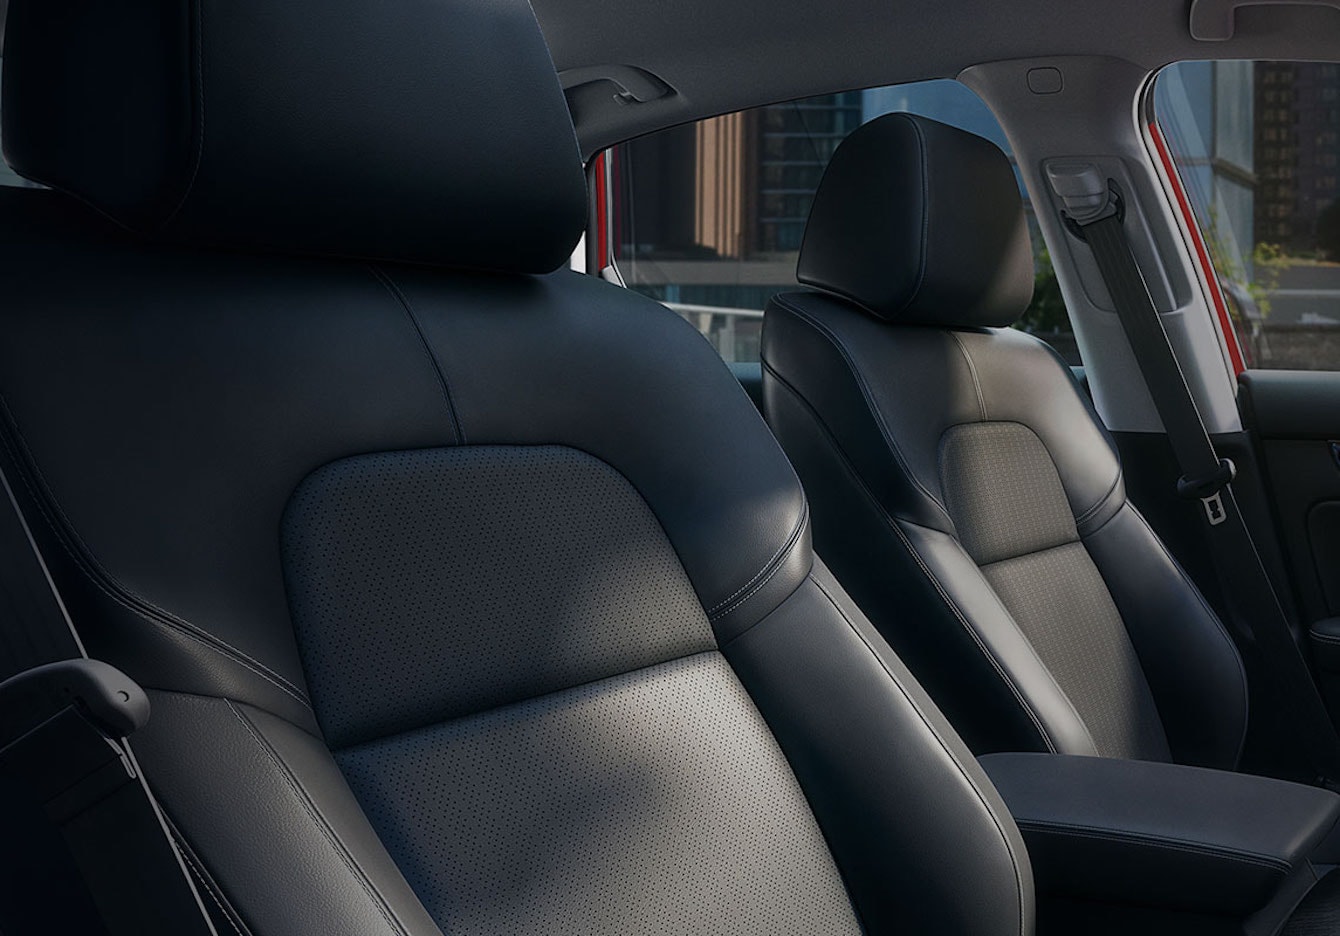 2022 Honda Civic front seats with Honda Body Stabilizing Seat design